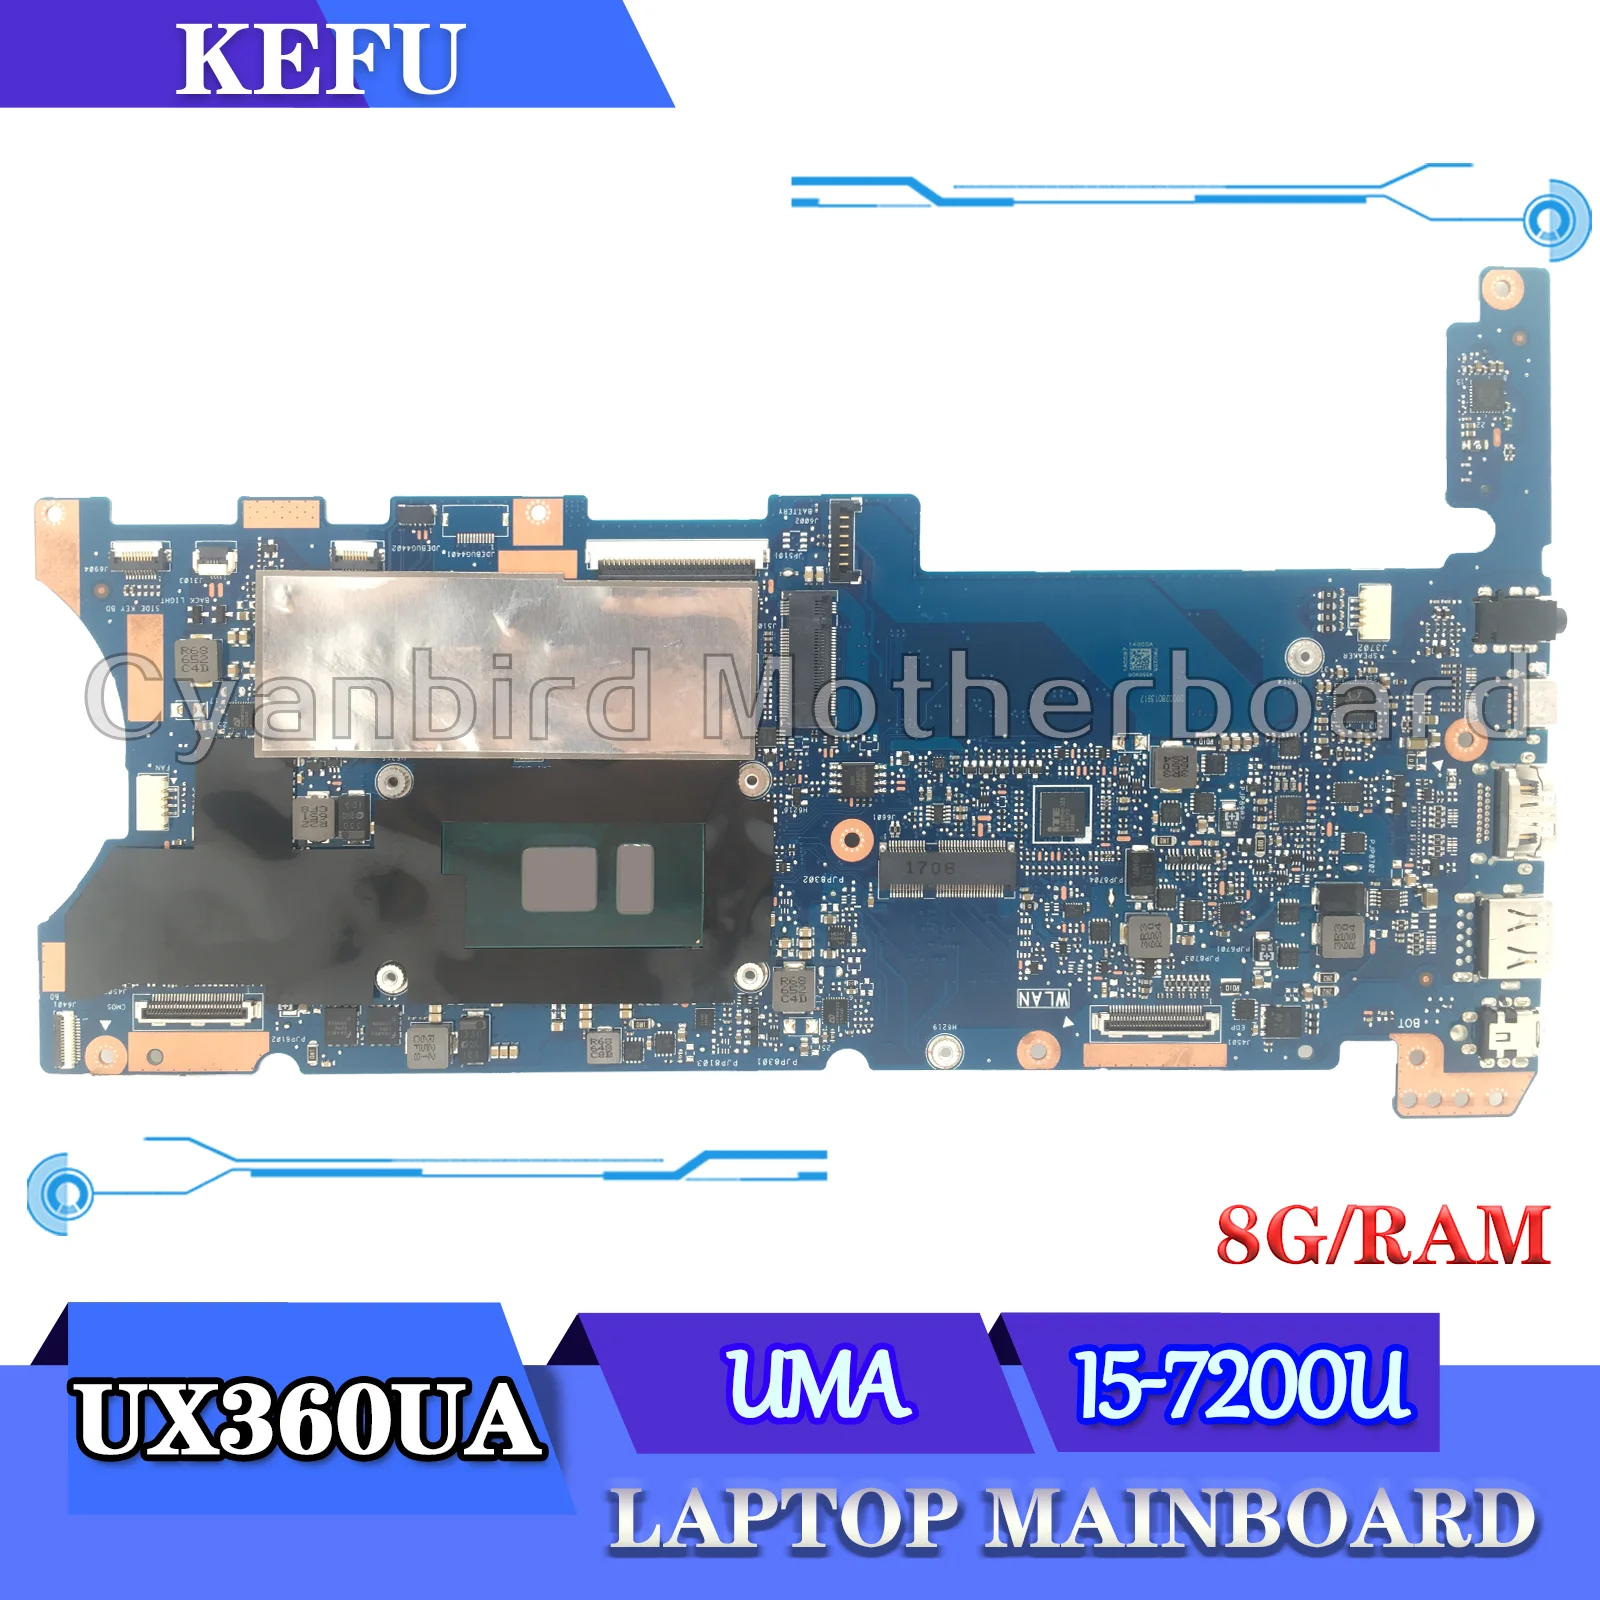 

KEFU ноутбук UX360UA I5-7200U 8 ГБ/RAM Материнская плата ASUS ZenBook Flip UX360UAK UX360U UX360 материнская плата для ноутбука UMA